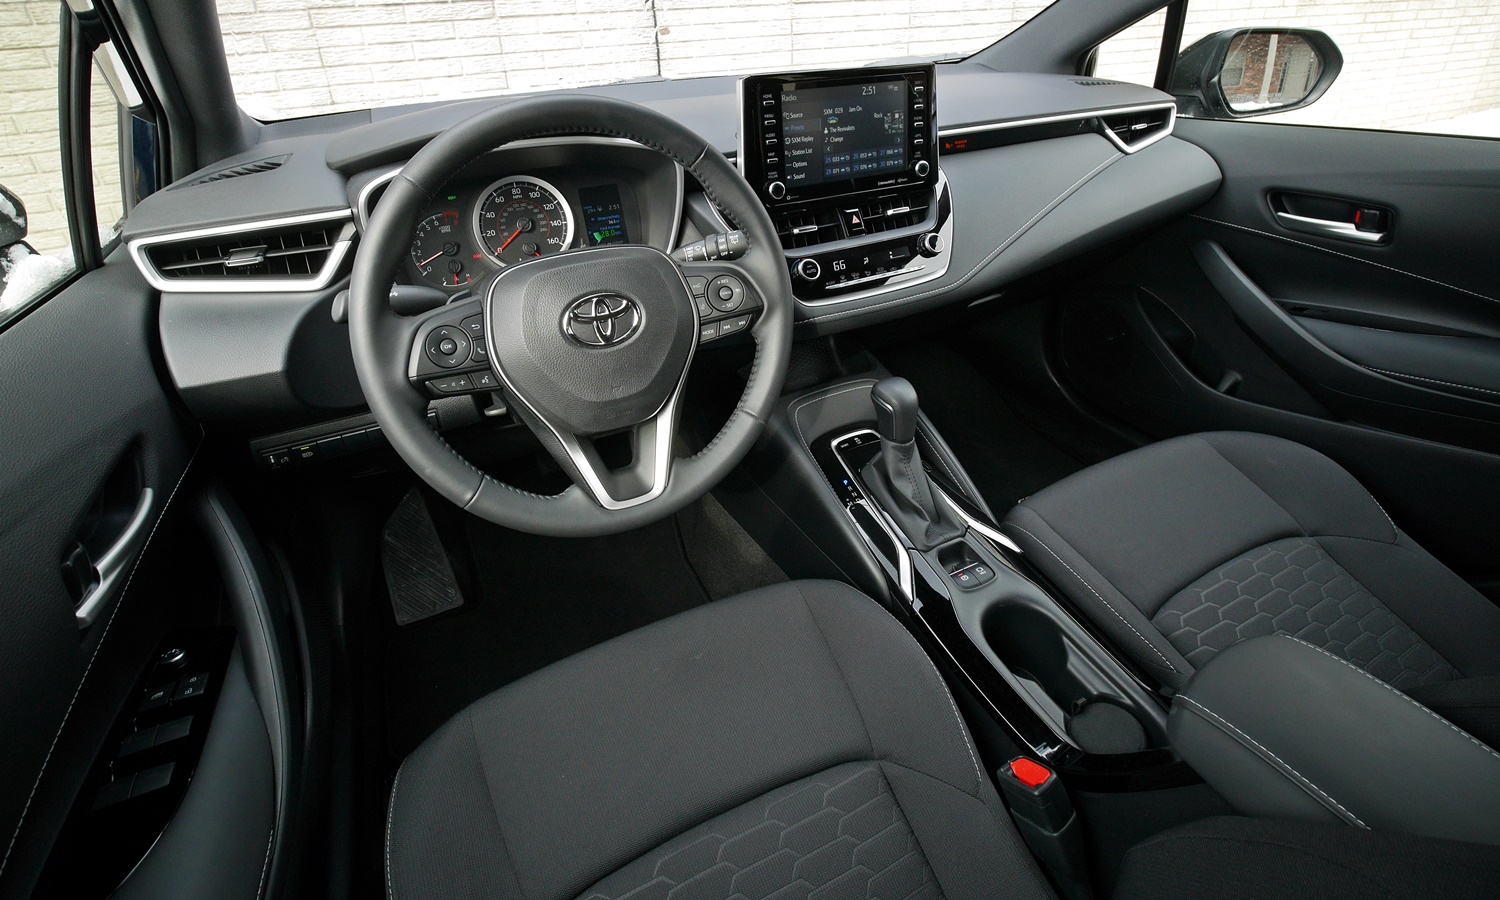 Corolla Hatchback Reviews: Toyota Corolla Hatchback interior